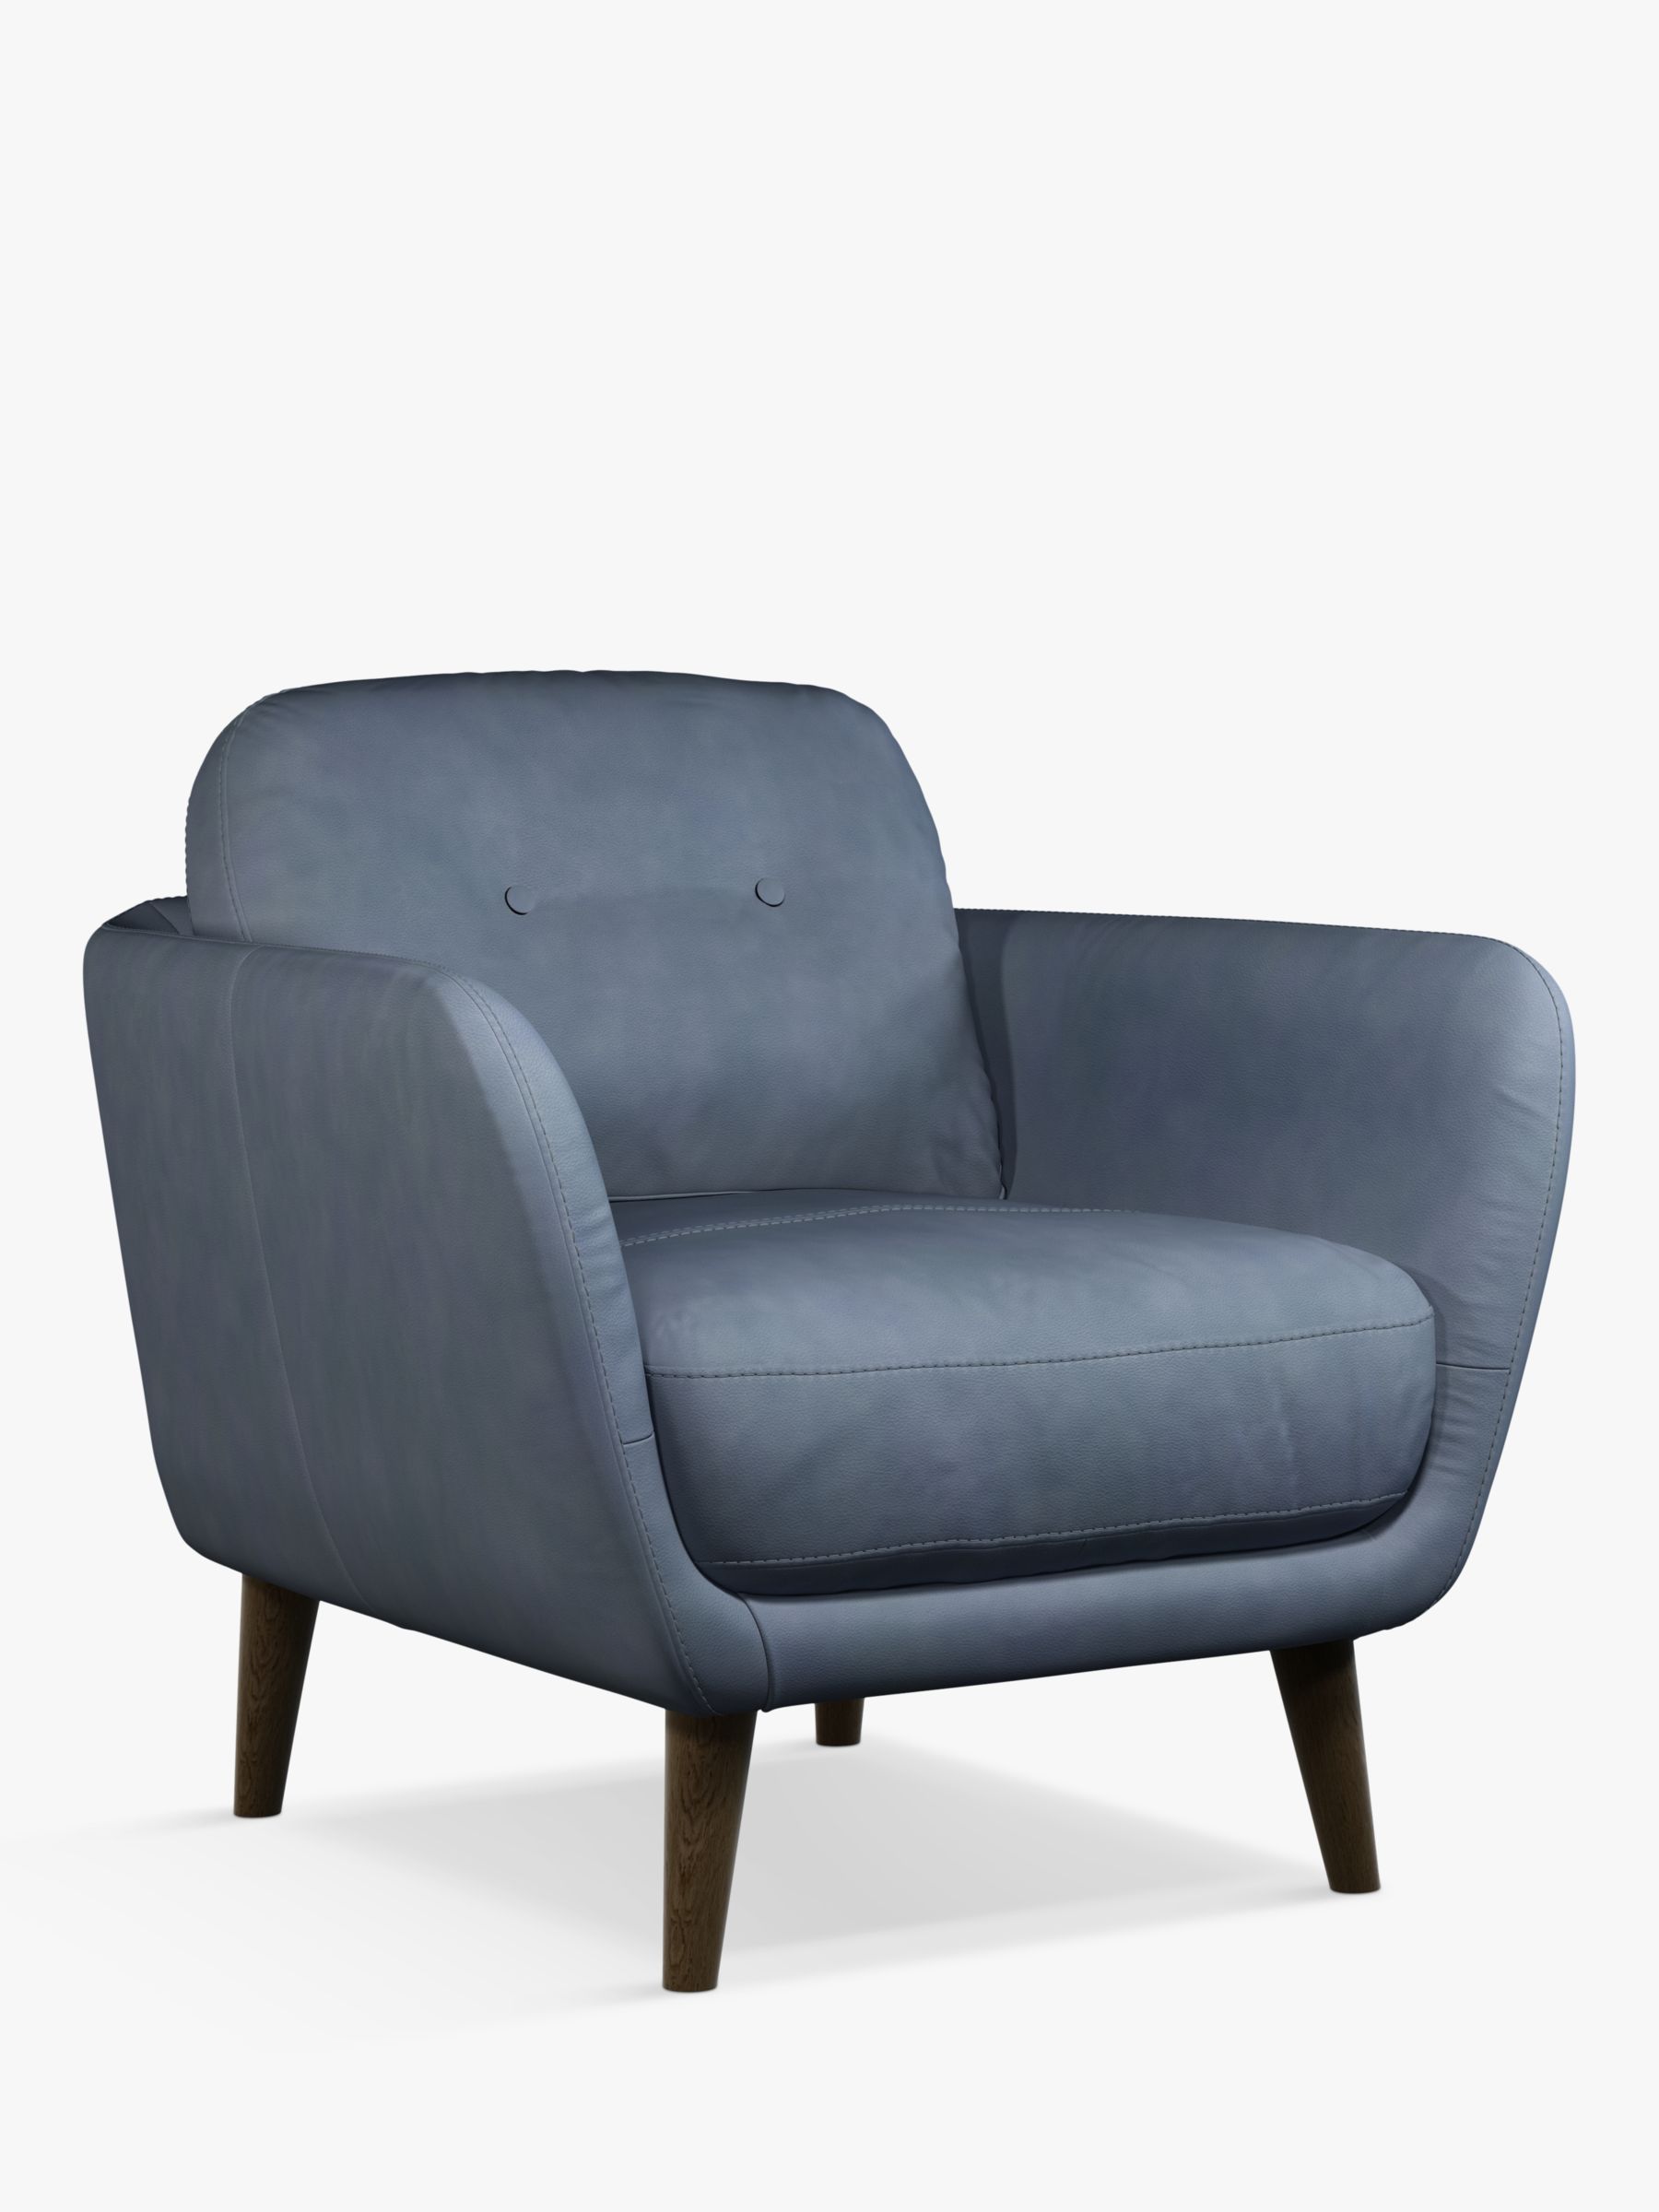 Arlo Range, John Lewis Arlo Leather Armchair, Dark Leg, Soft Touch Blue